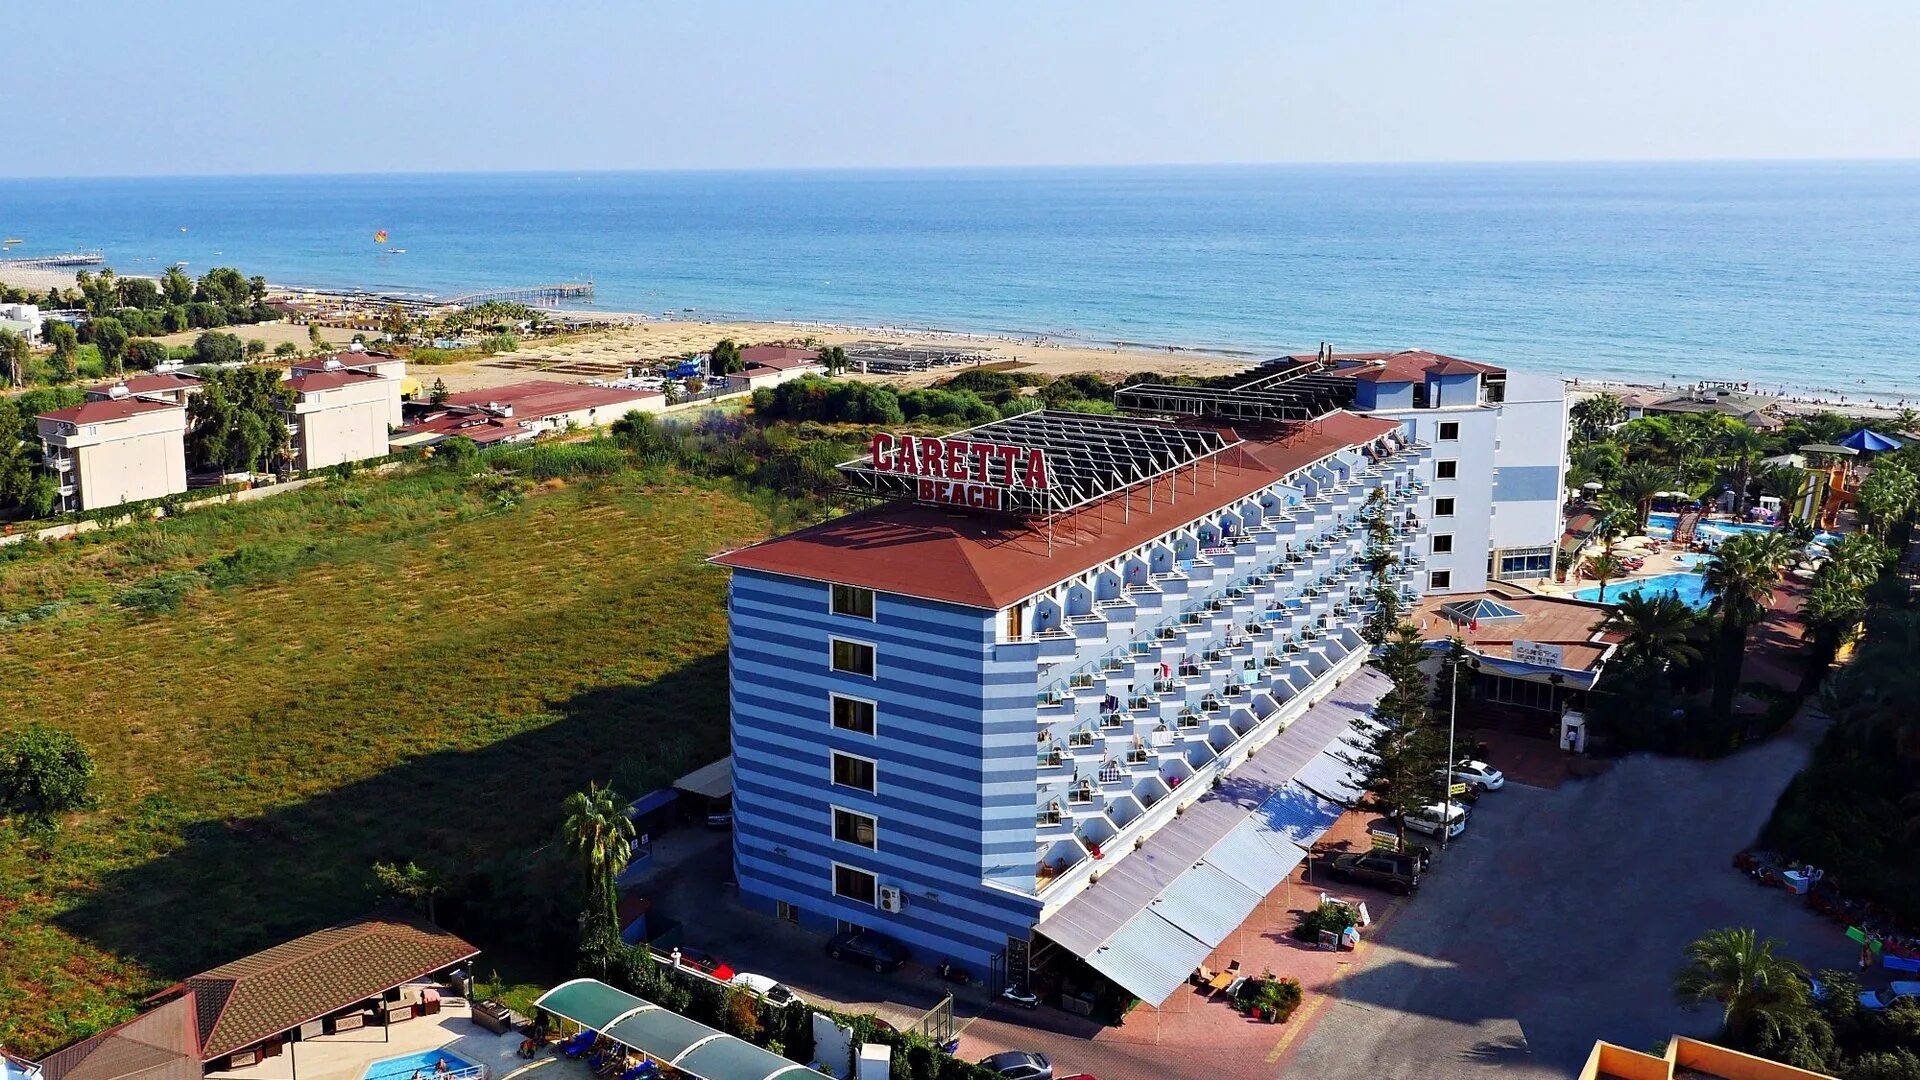 Caretta beach hotel турция аланья. Алания Конаклы карета Бич. Турция отель карета Бич 4 Алания. Аланья клаб Каретта Бич. Caretta Beach Hotel 4 Турция.